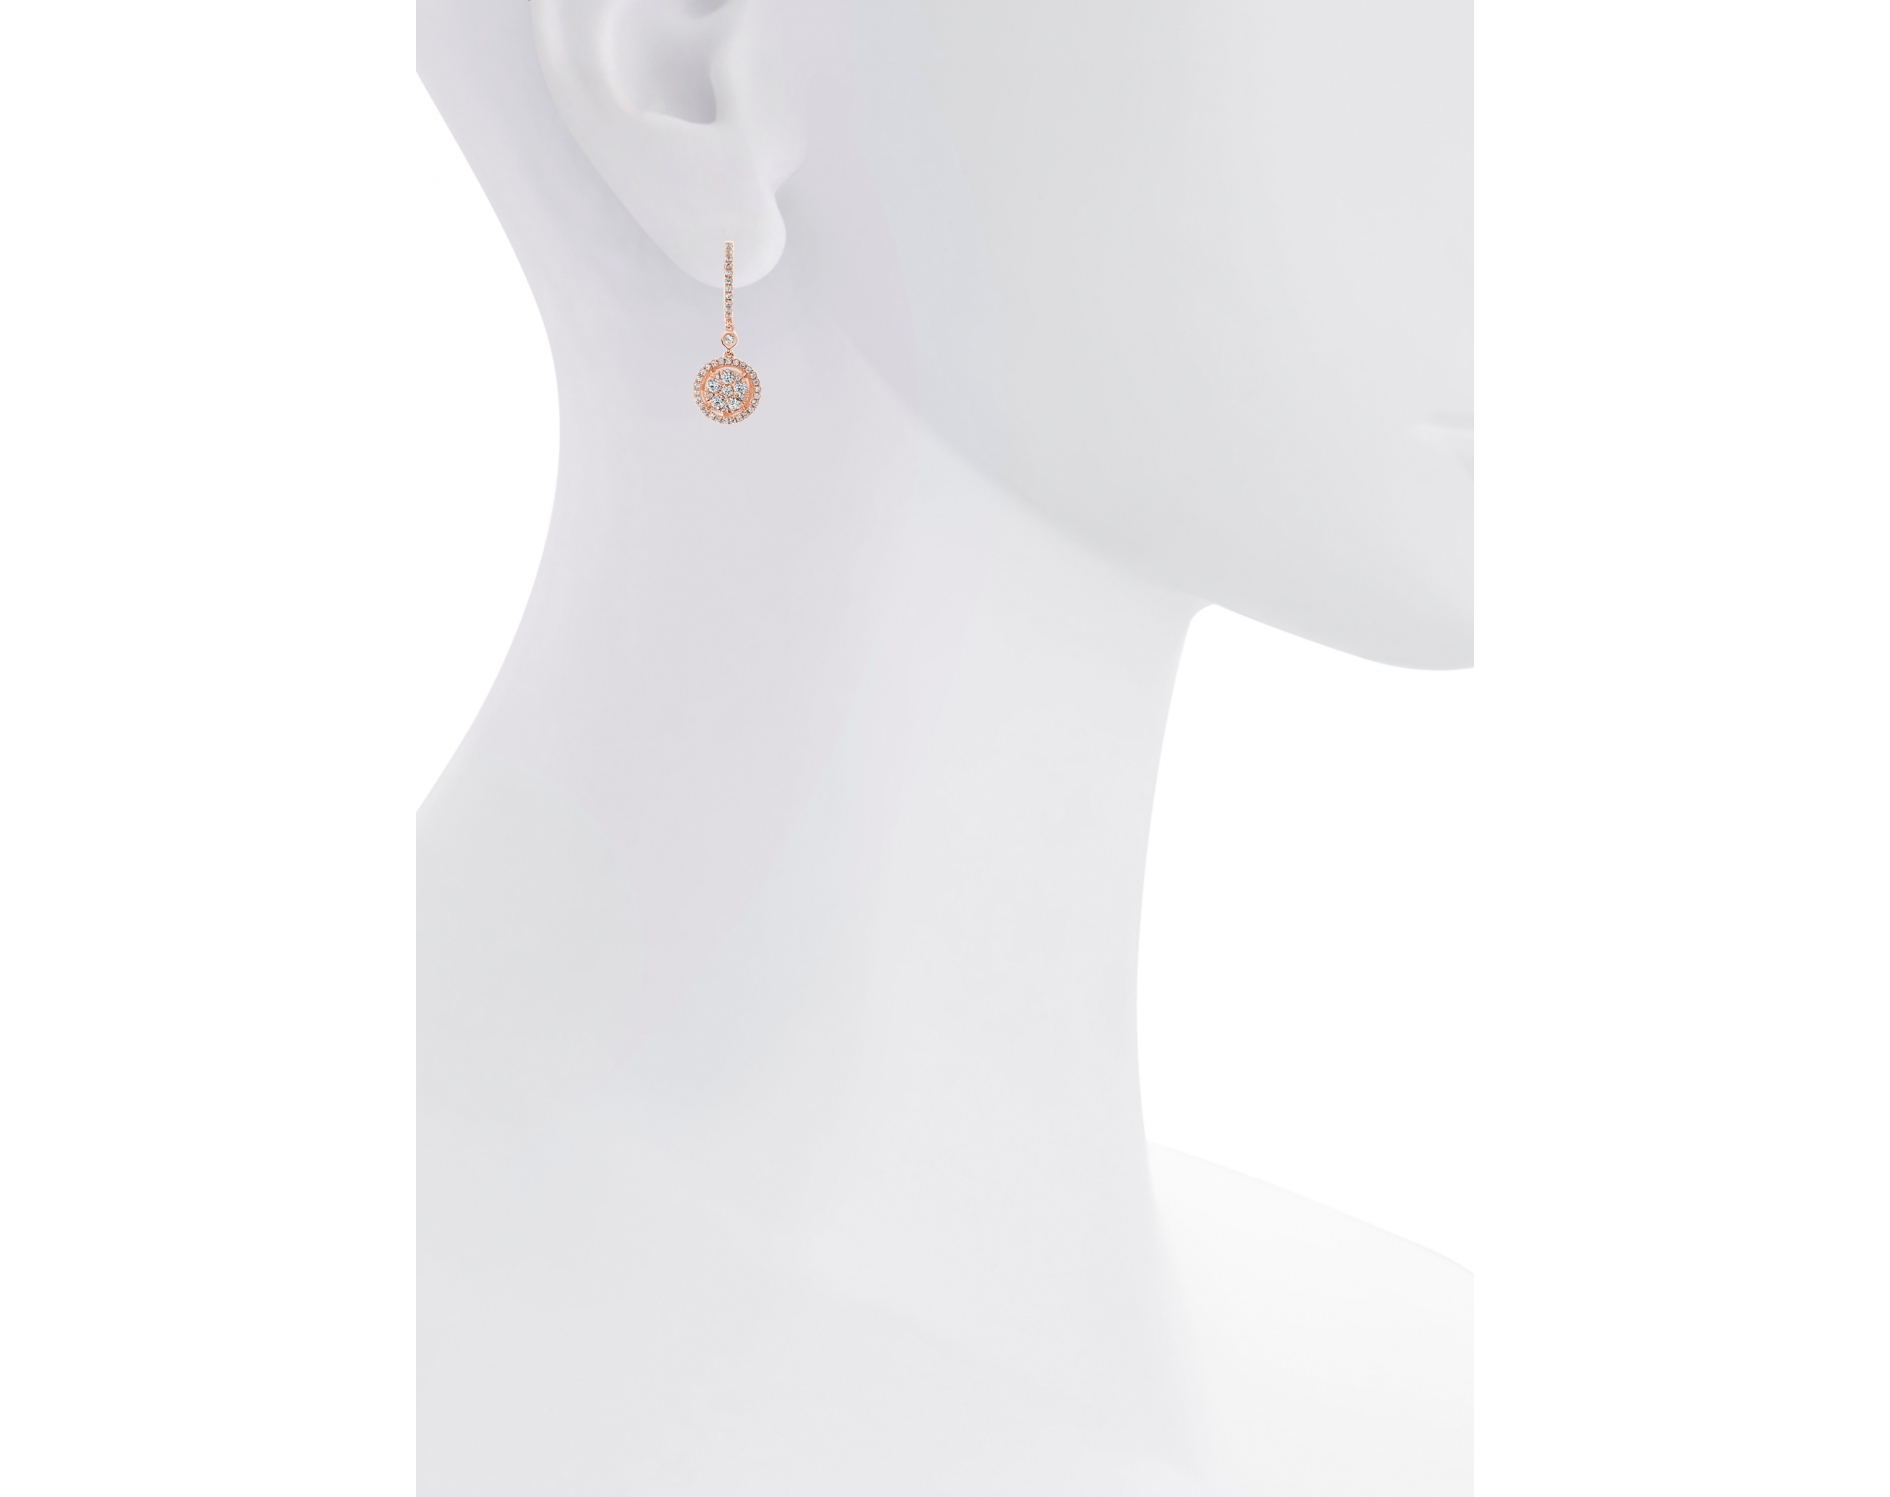 18k rose gold halo illusion set diamond earrings with upstones